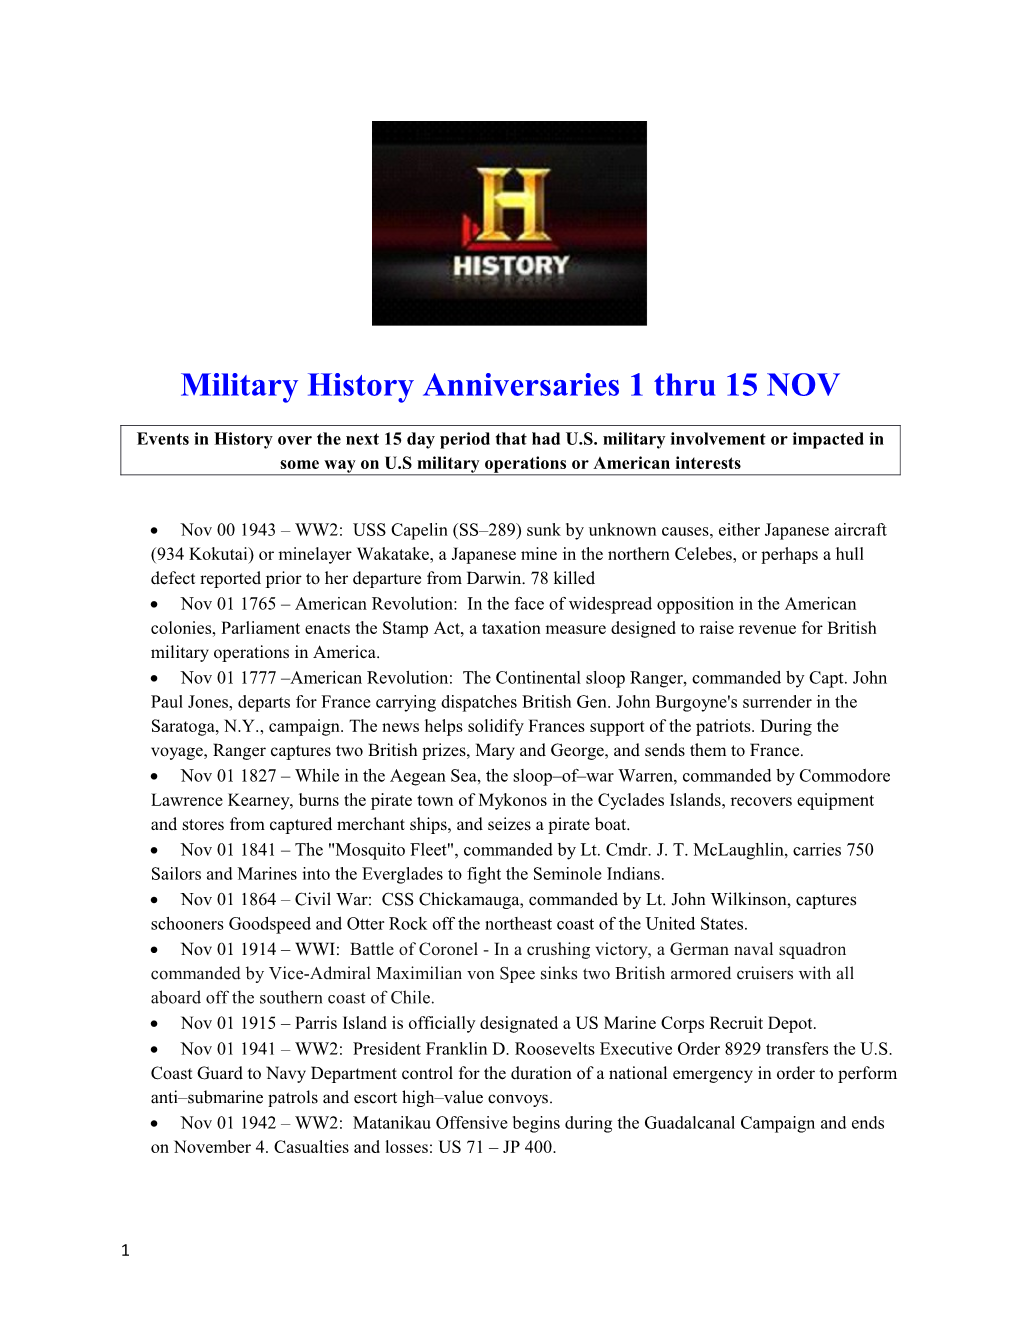 Military History Anniversaries 1 Thru 15NOV